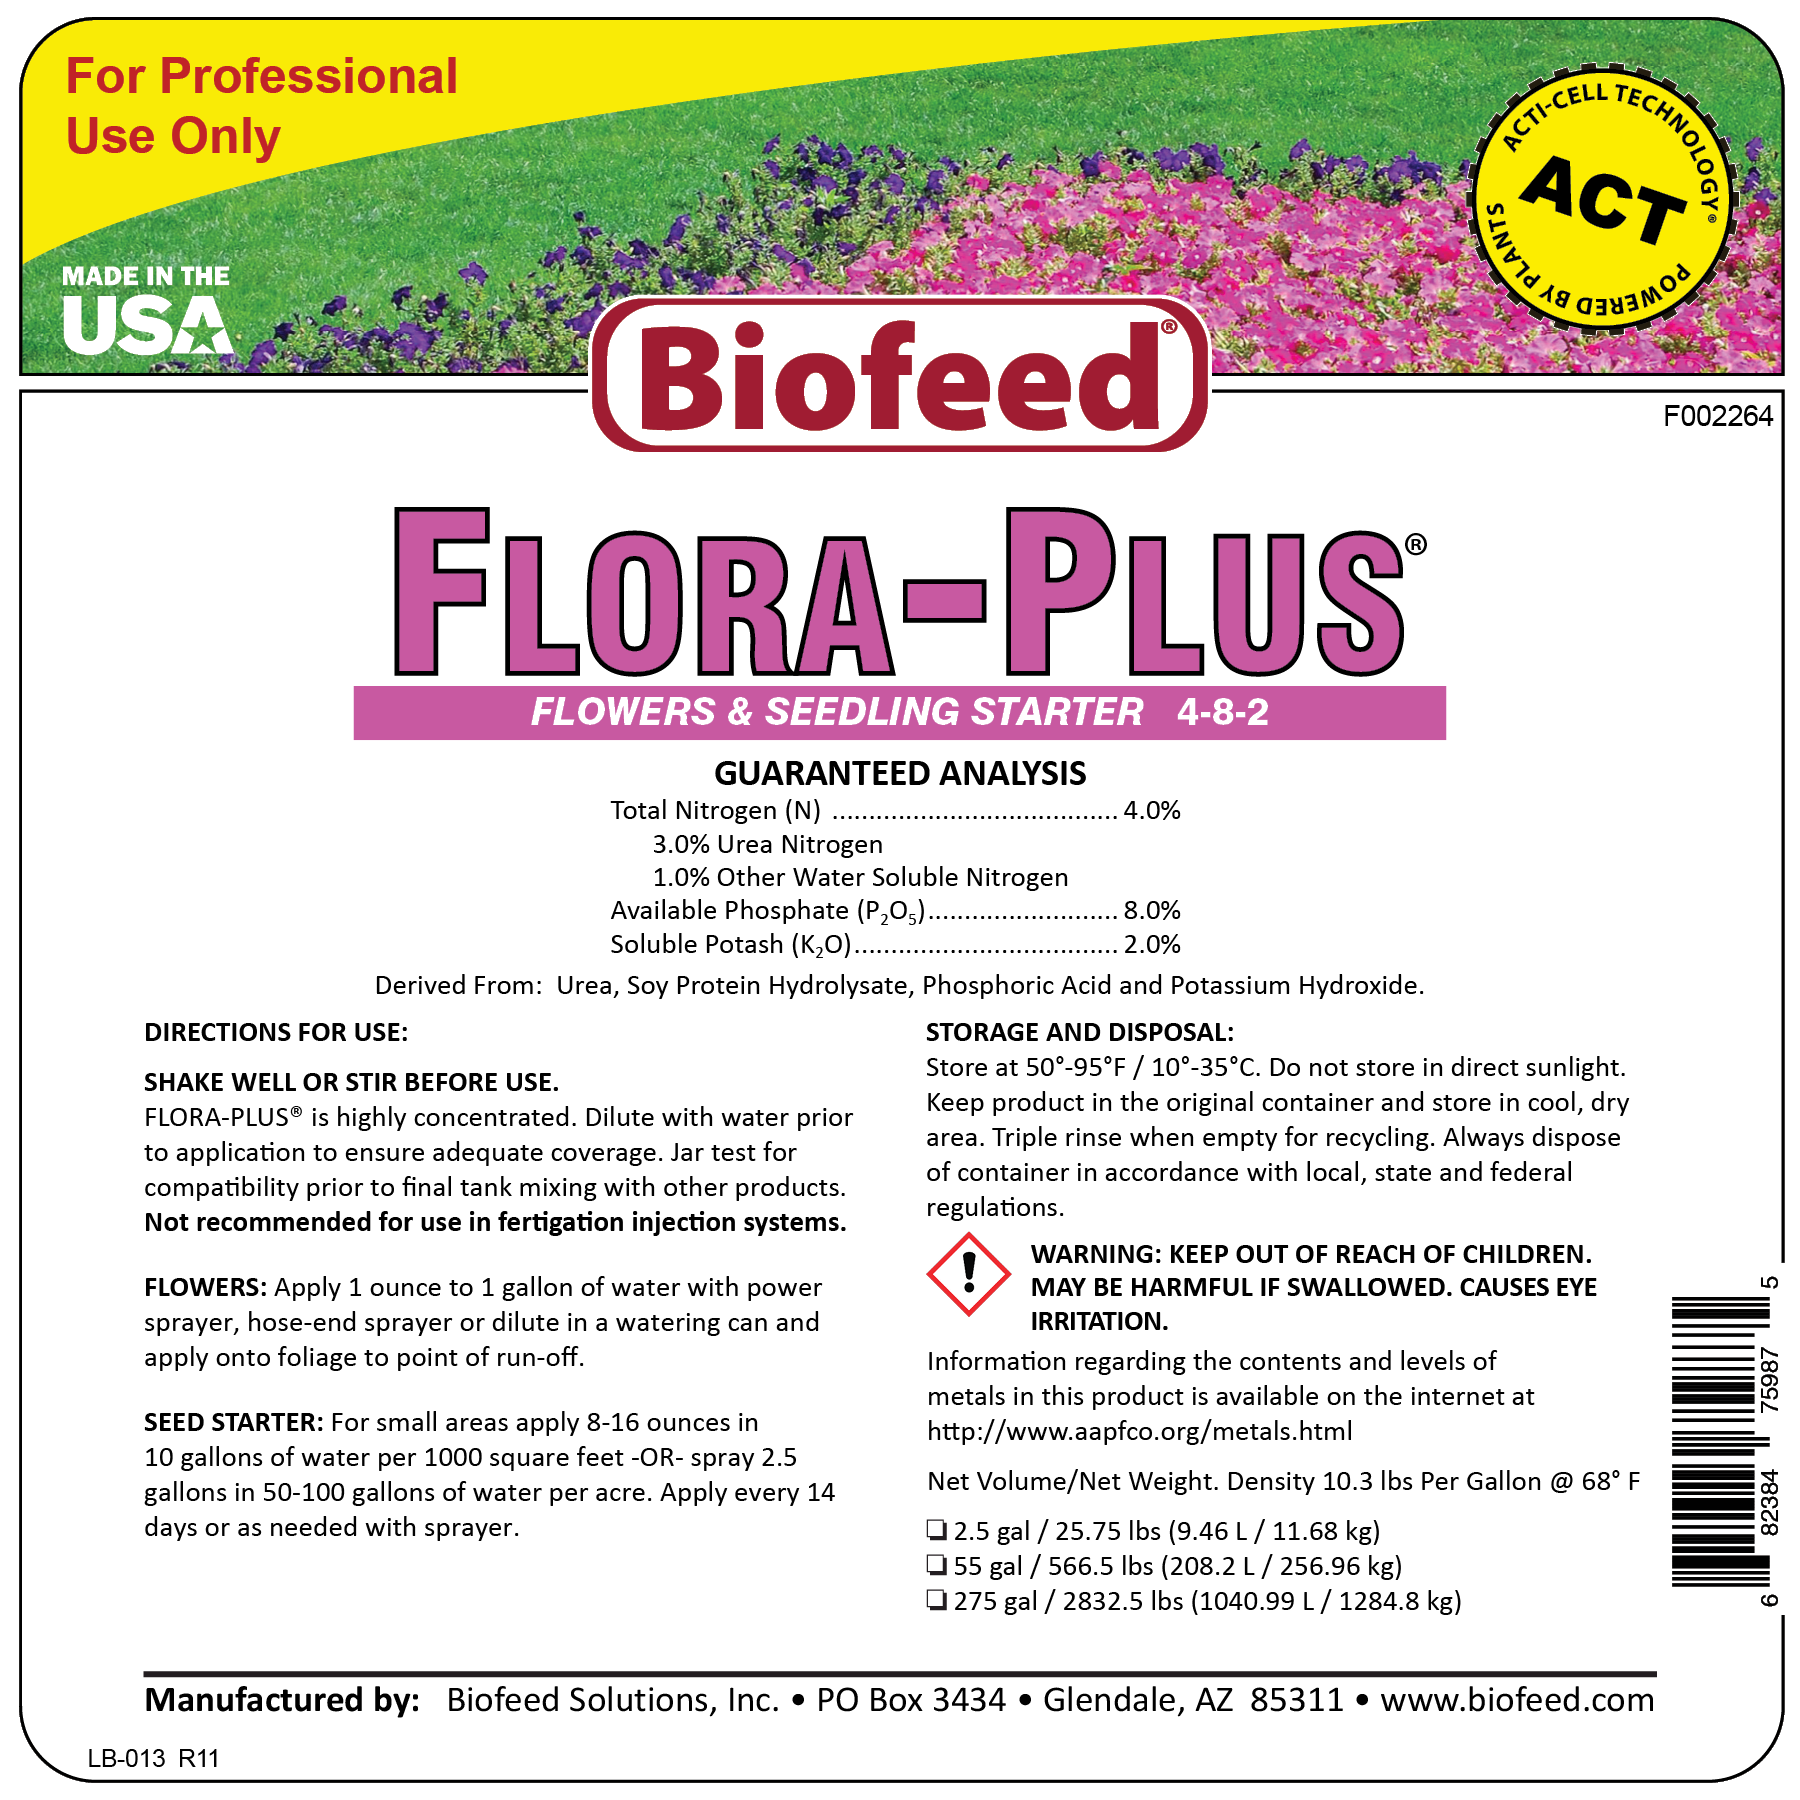 Flora-Plus Flower and Seedling Starter